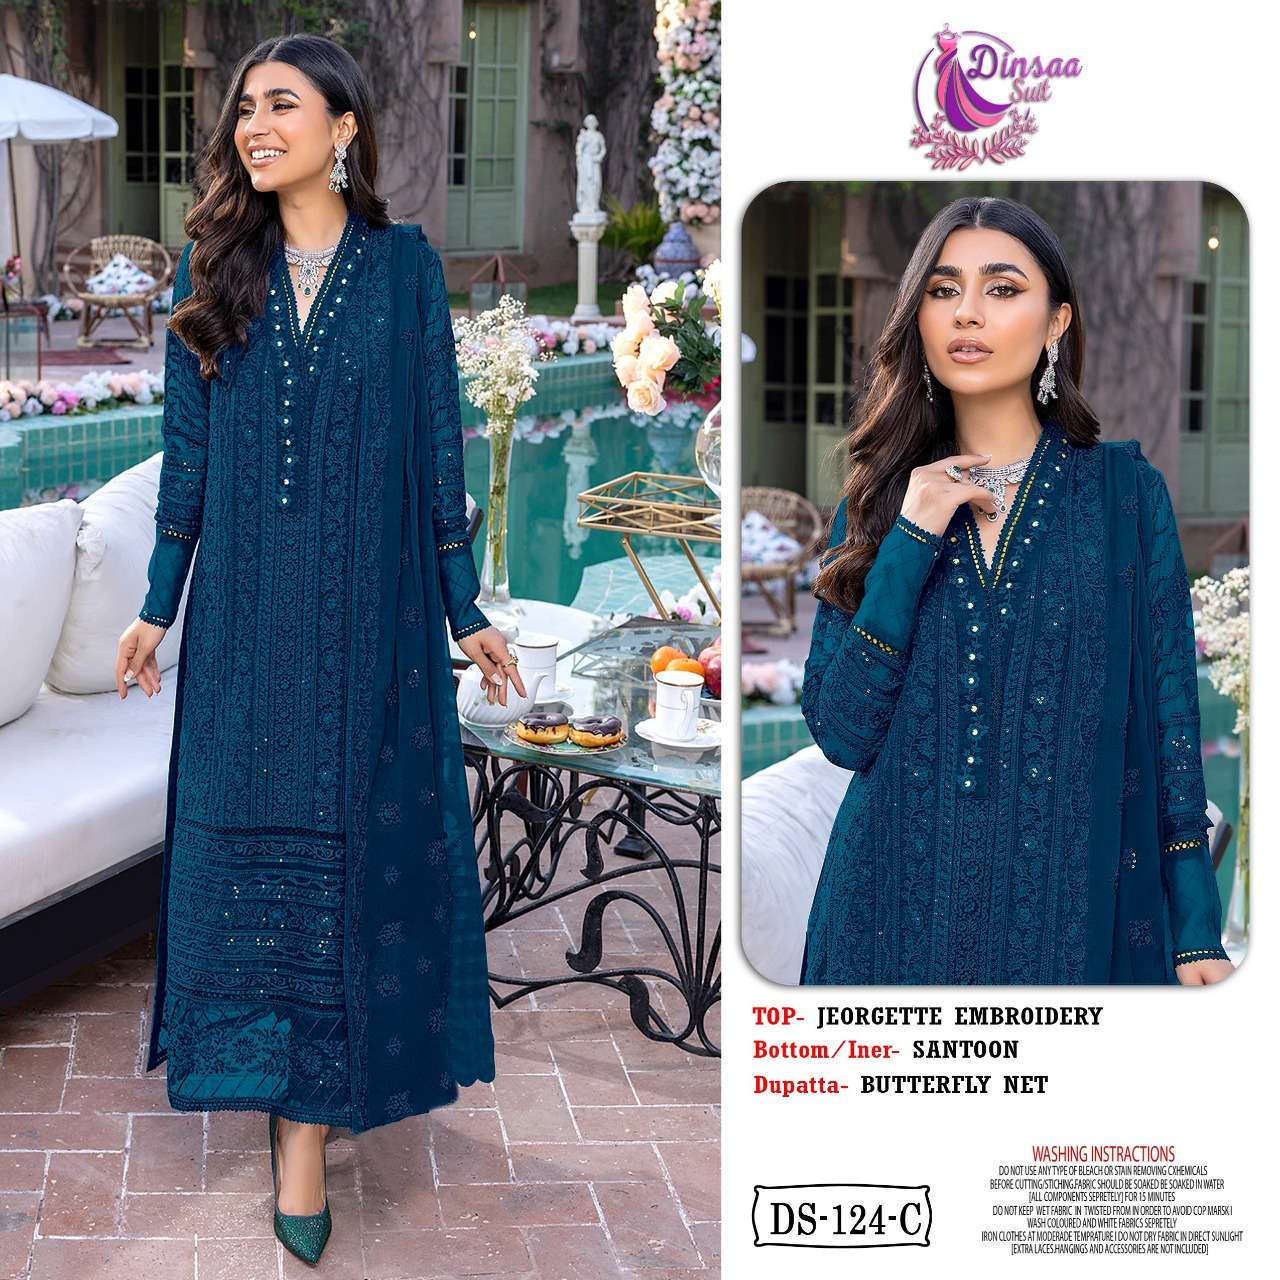 dinsaa suits 124 color edition georgette embroidered salwar kameez wholesale price surat